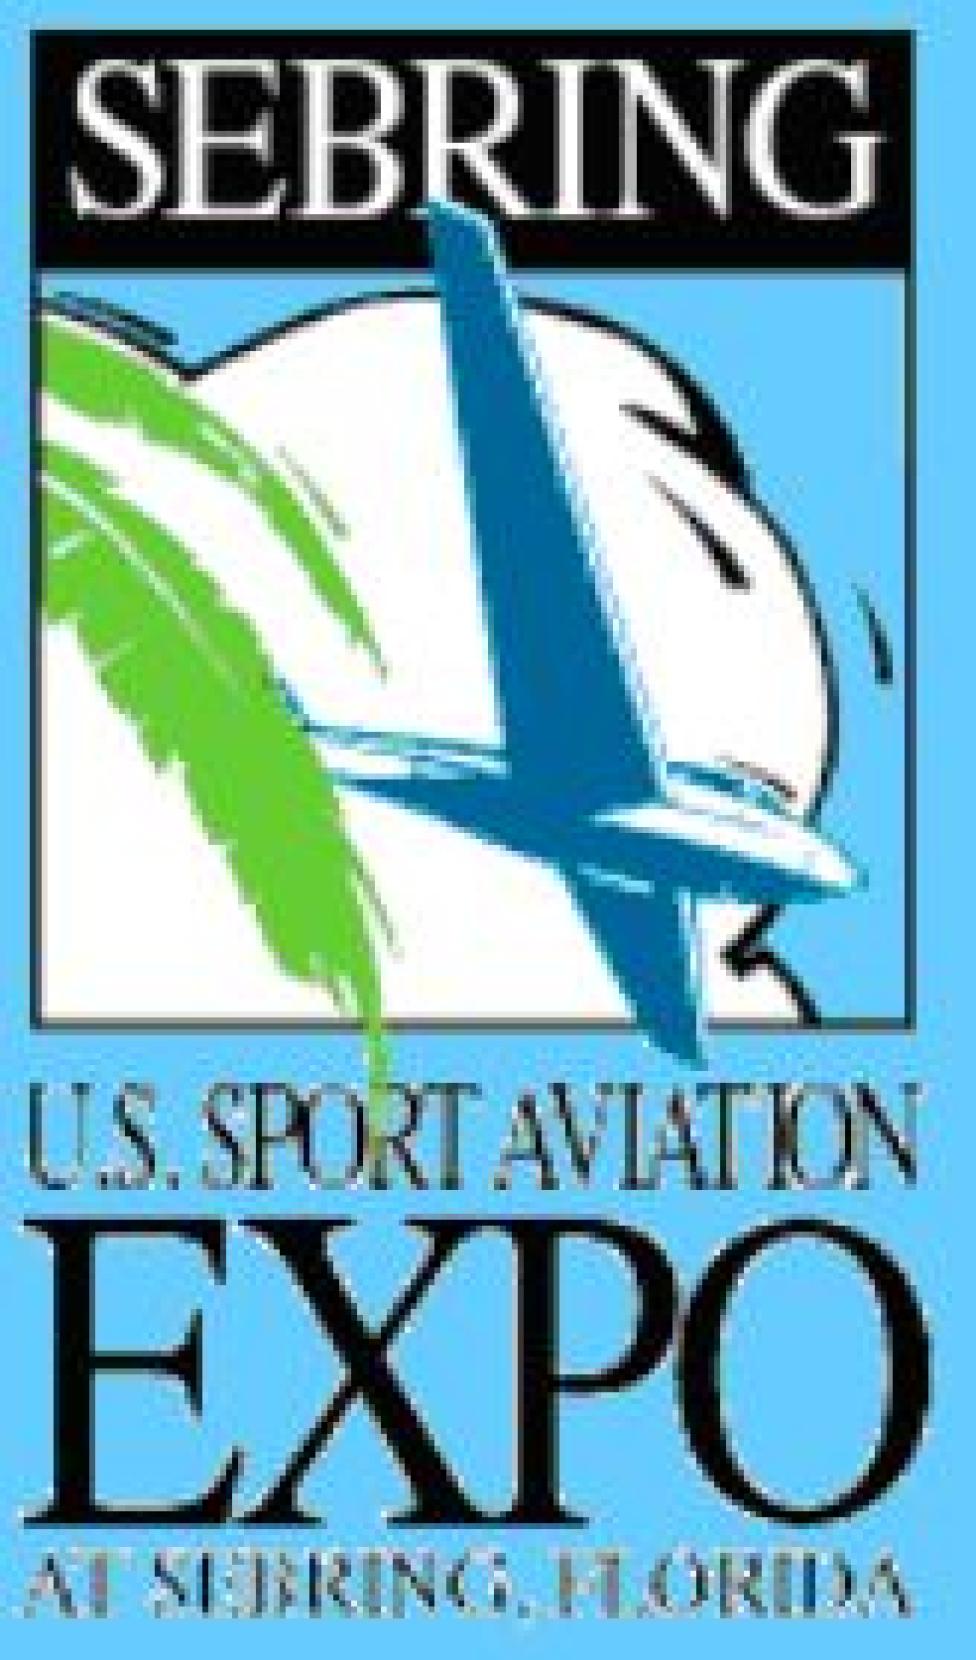 U.S. Sport Aviation EXPO